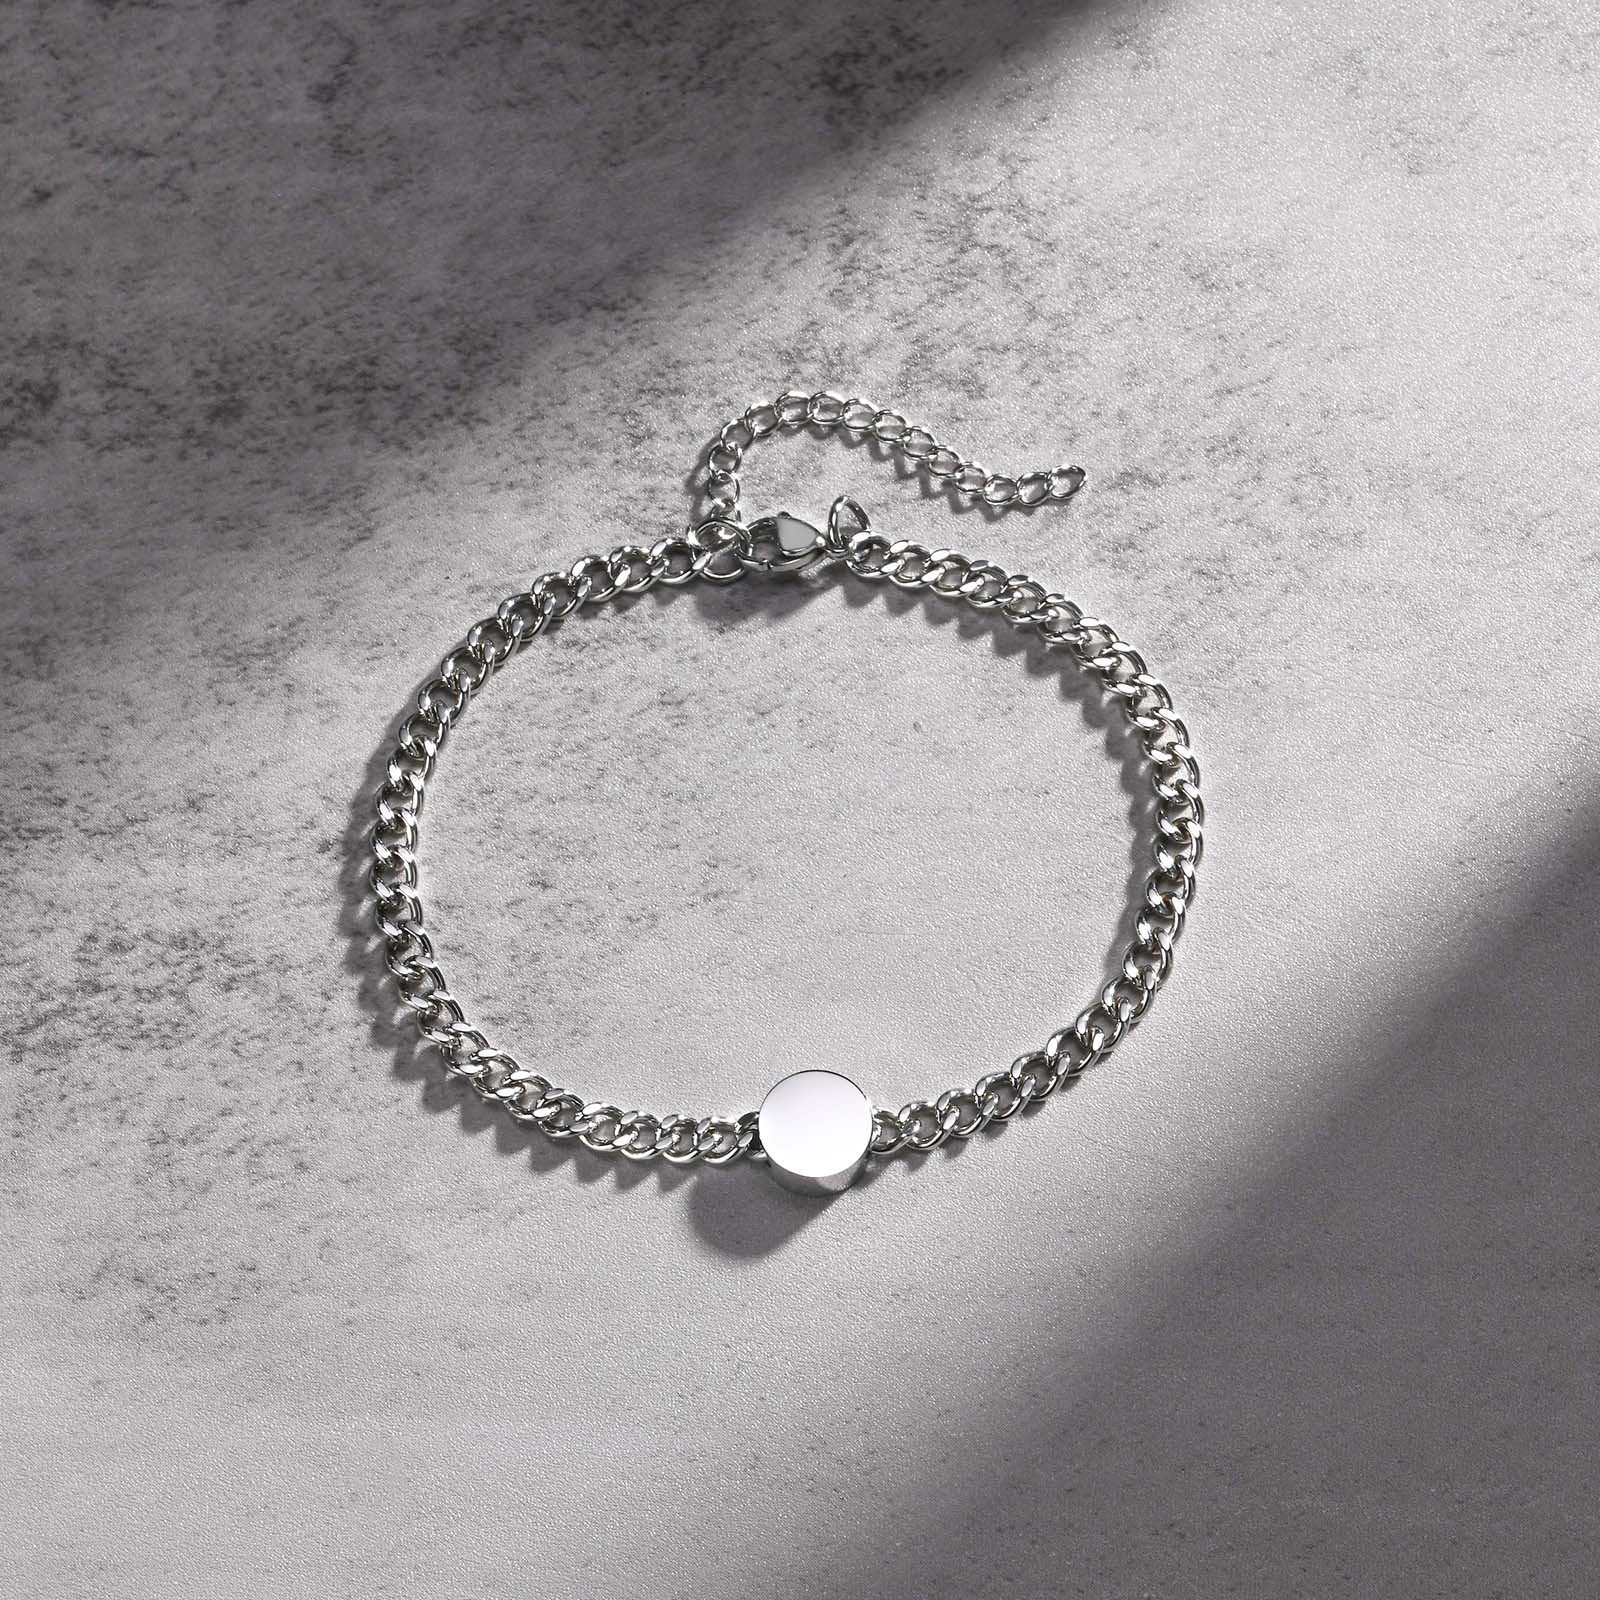 2:1 accessory [blank] bracelet